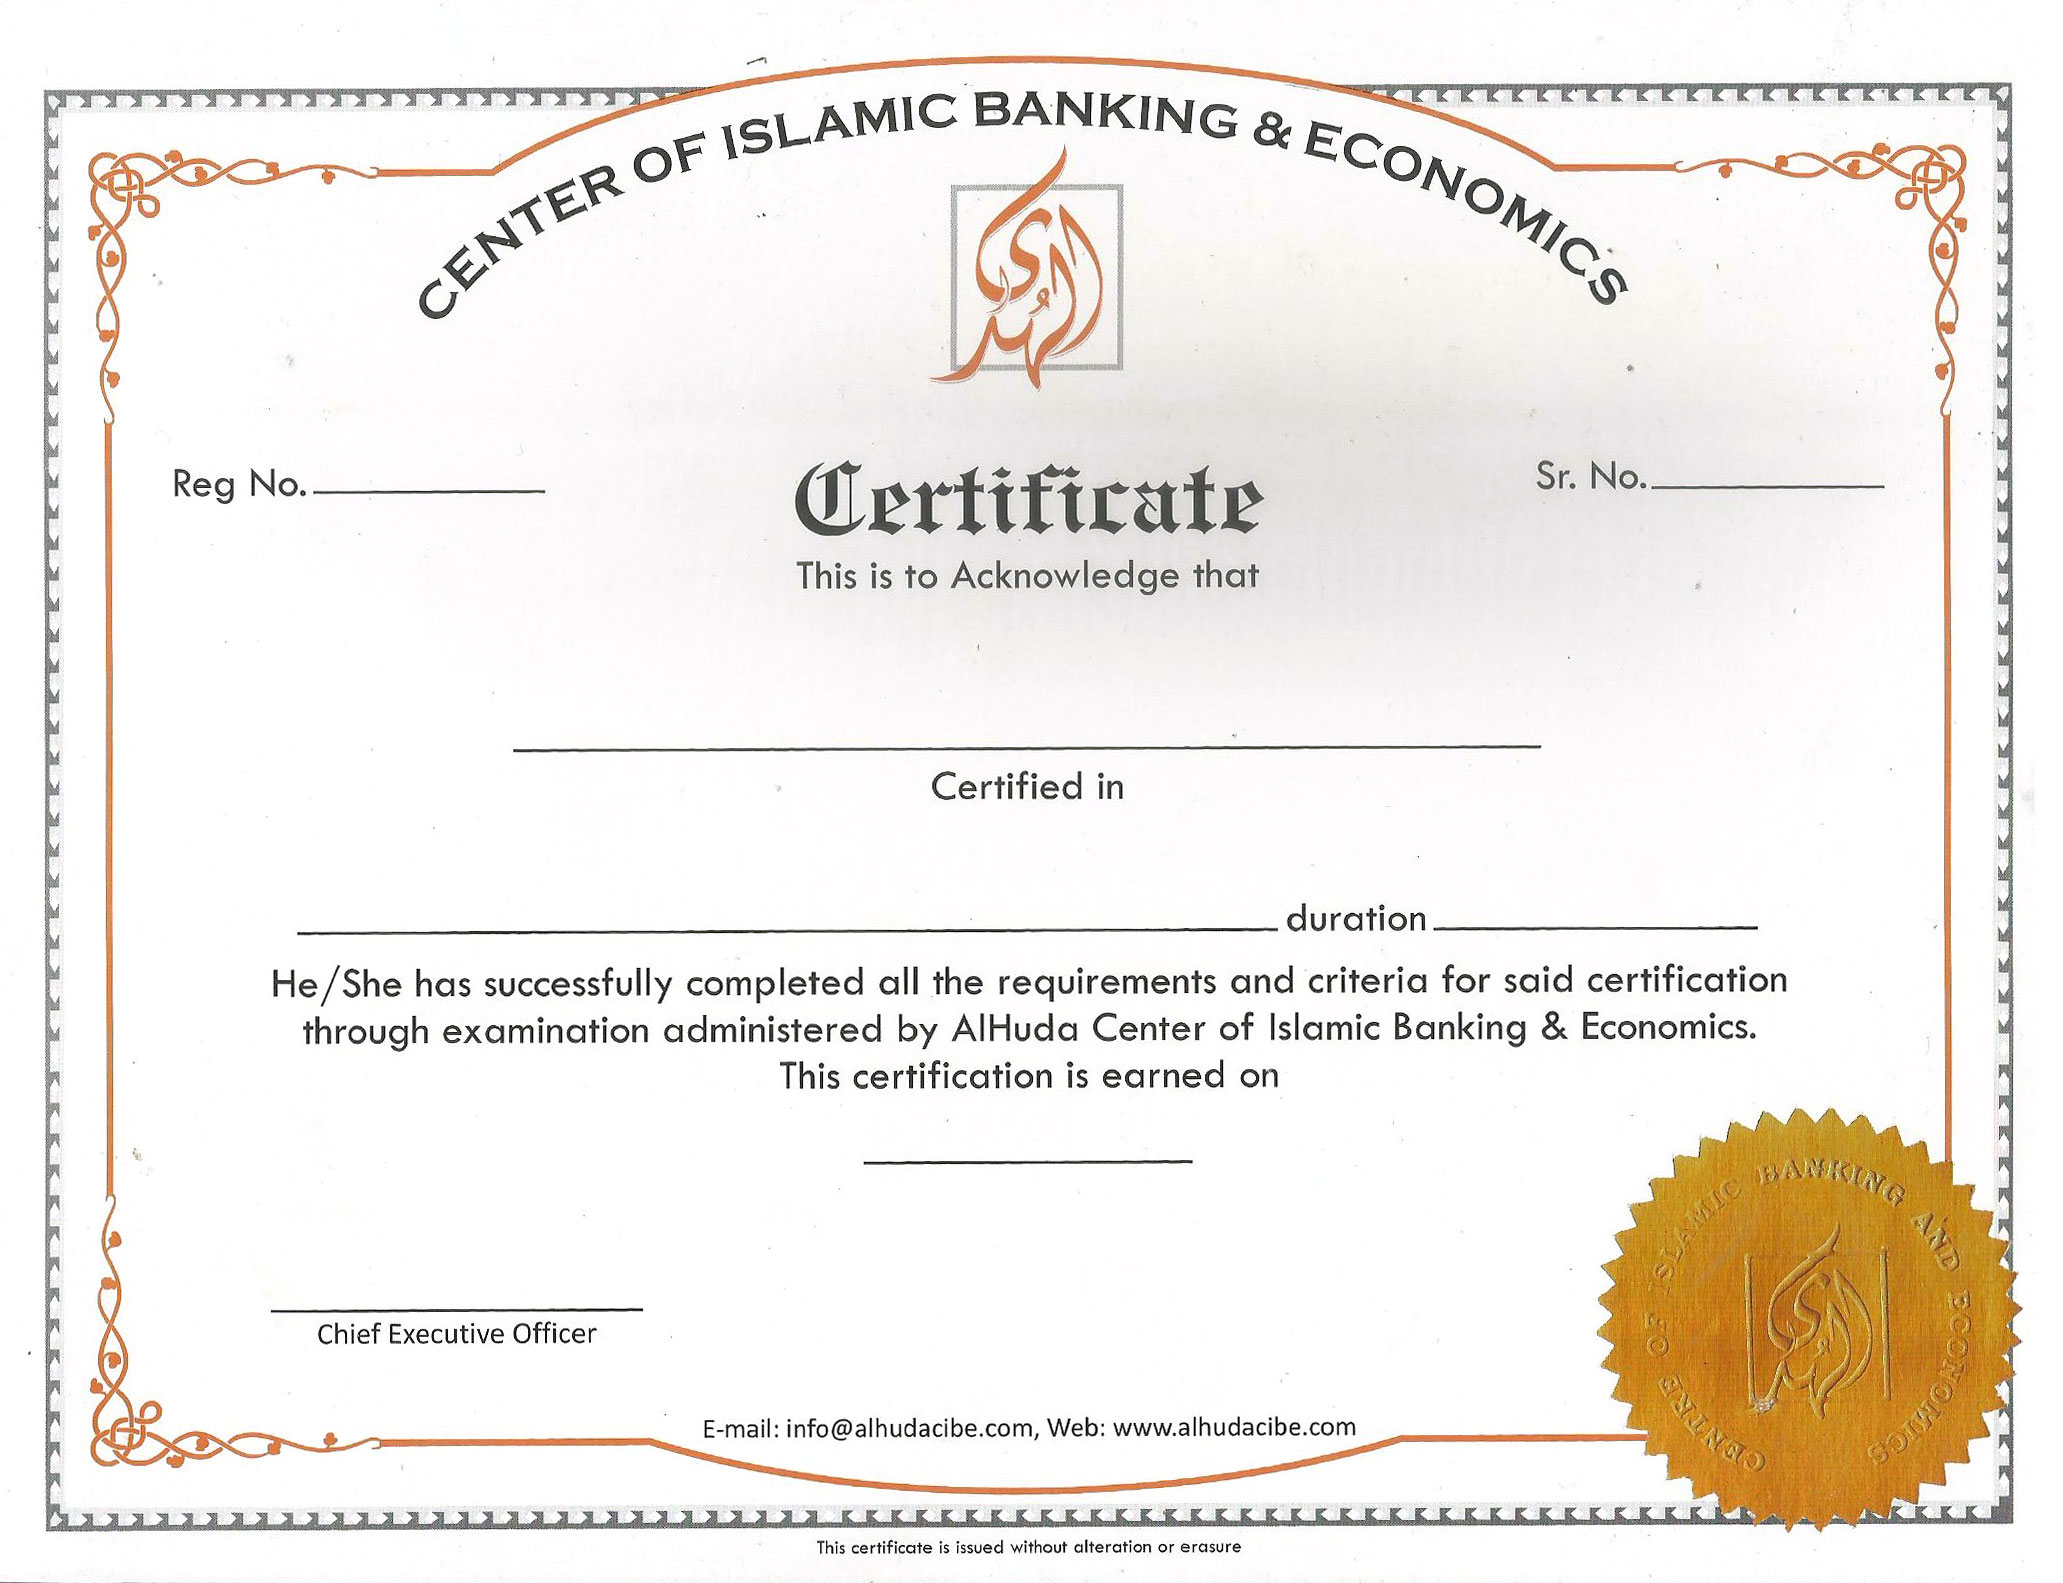 Islam internship bank Apply for